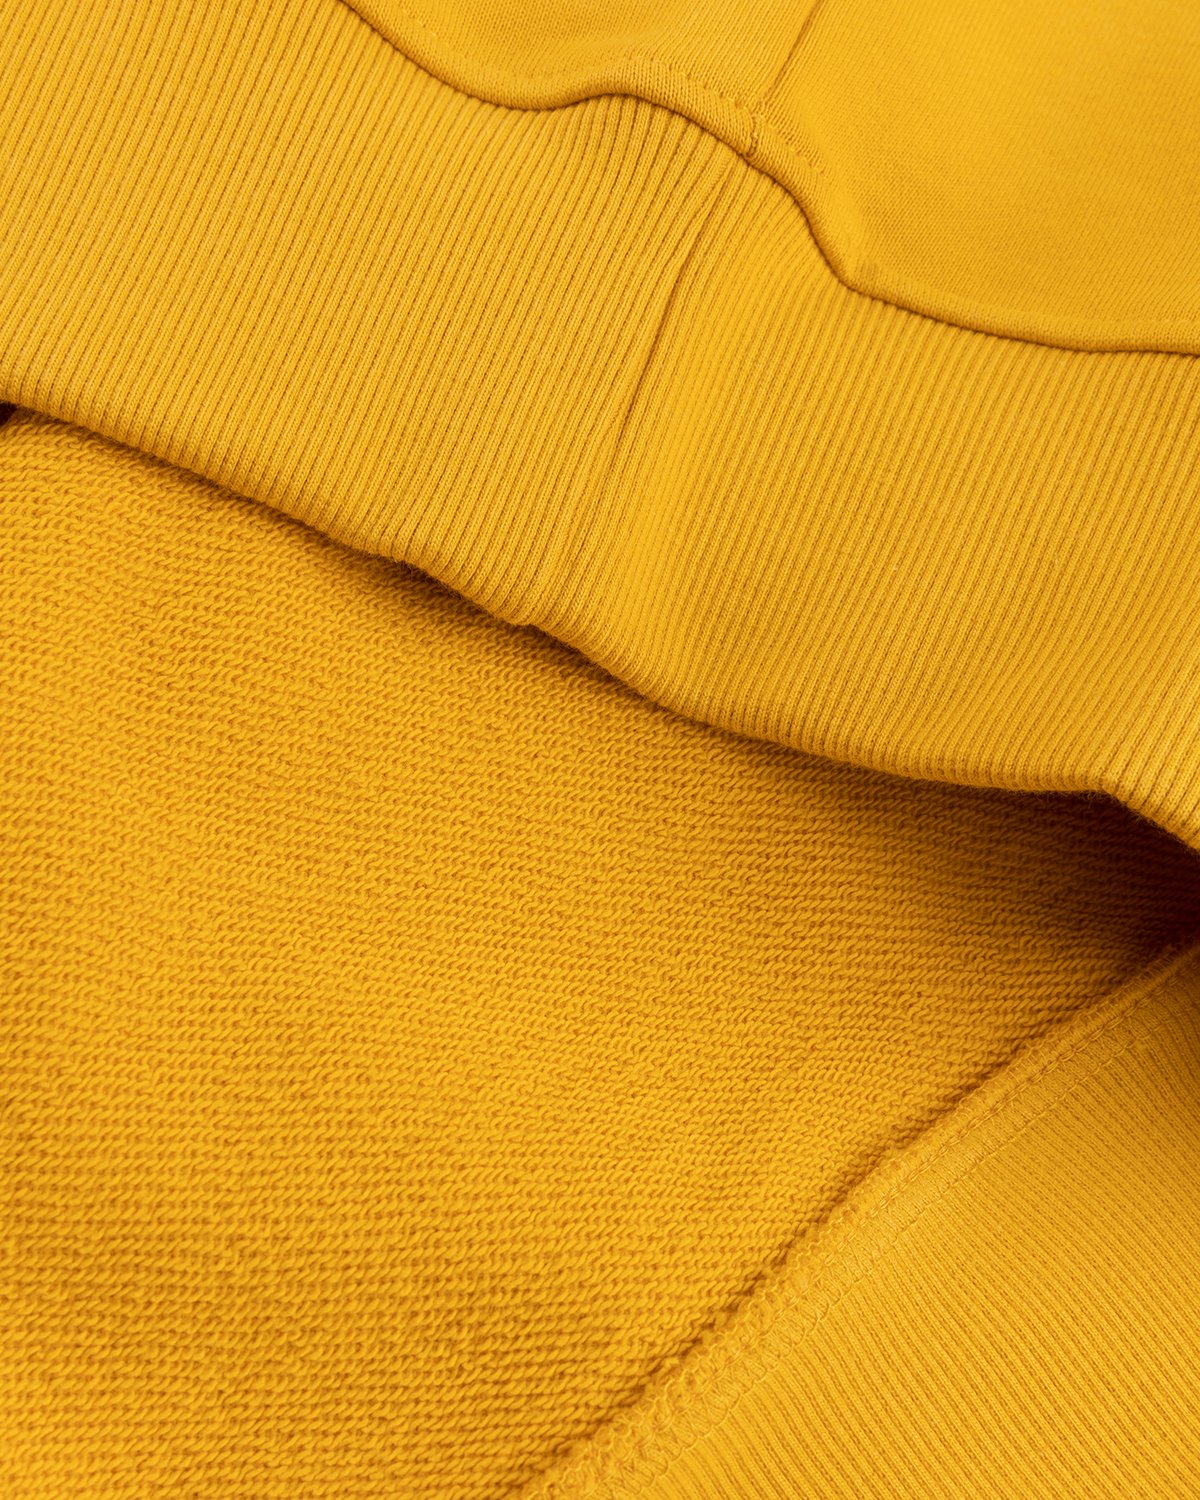 New Balance - Conversations Amongst Us Hoodie Aspen Yellow - Clothing - Yellow - Image 3